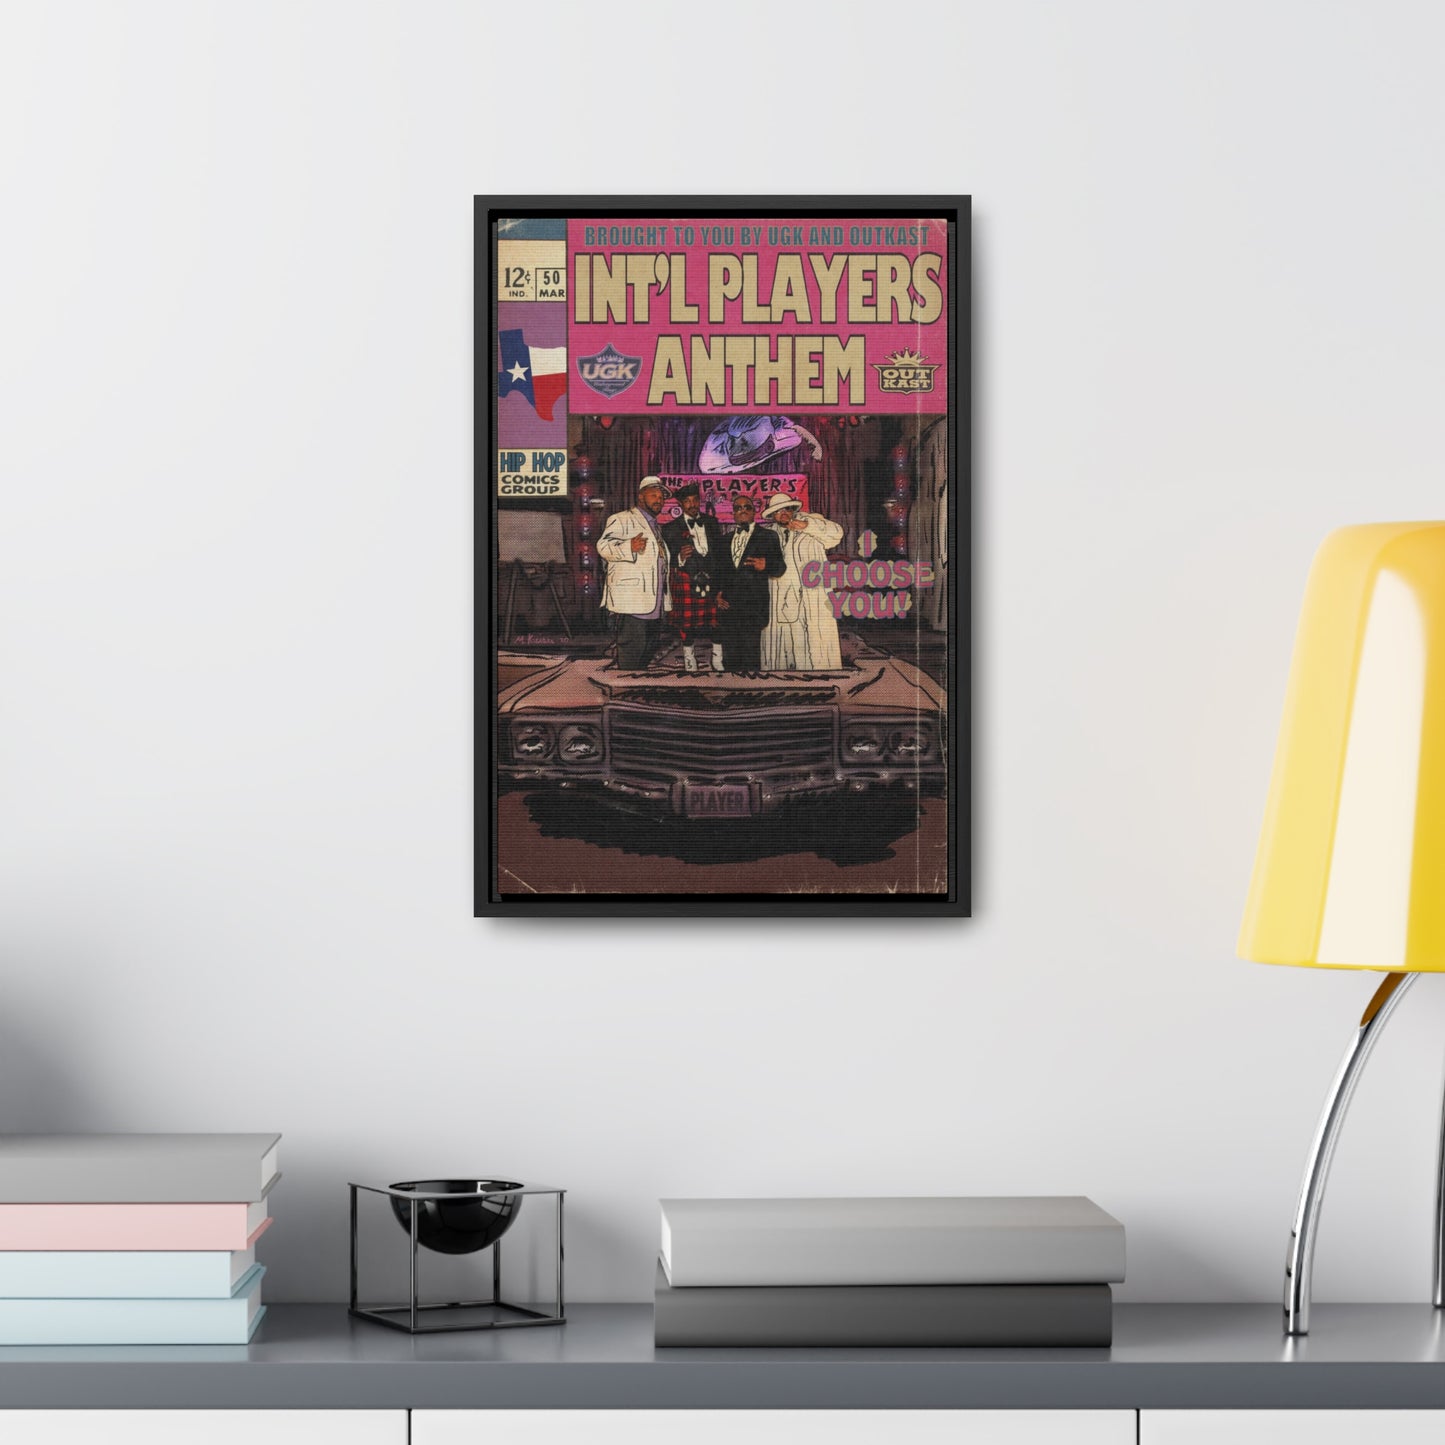 UGK & OutKast - Int’l Players Anthem (I Choose You) Gallery Canvas Wraps, Vertical Frame